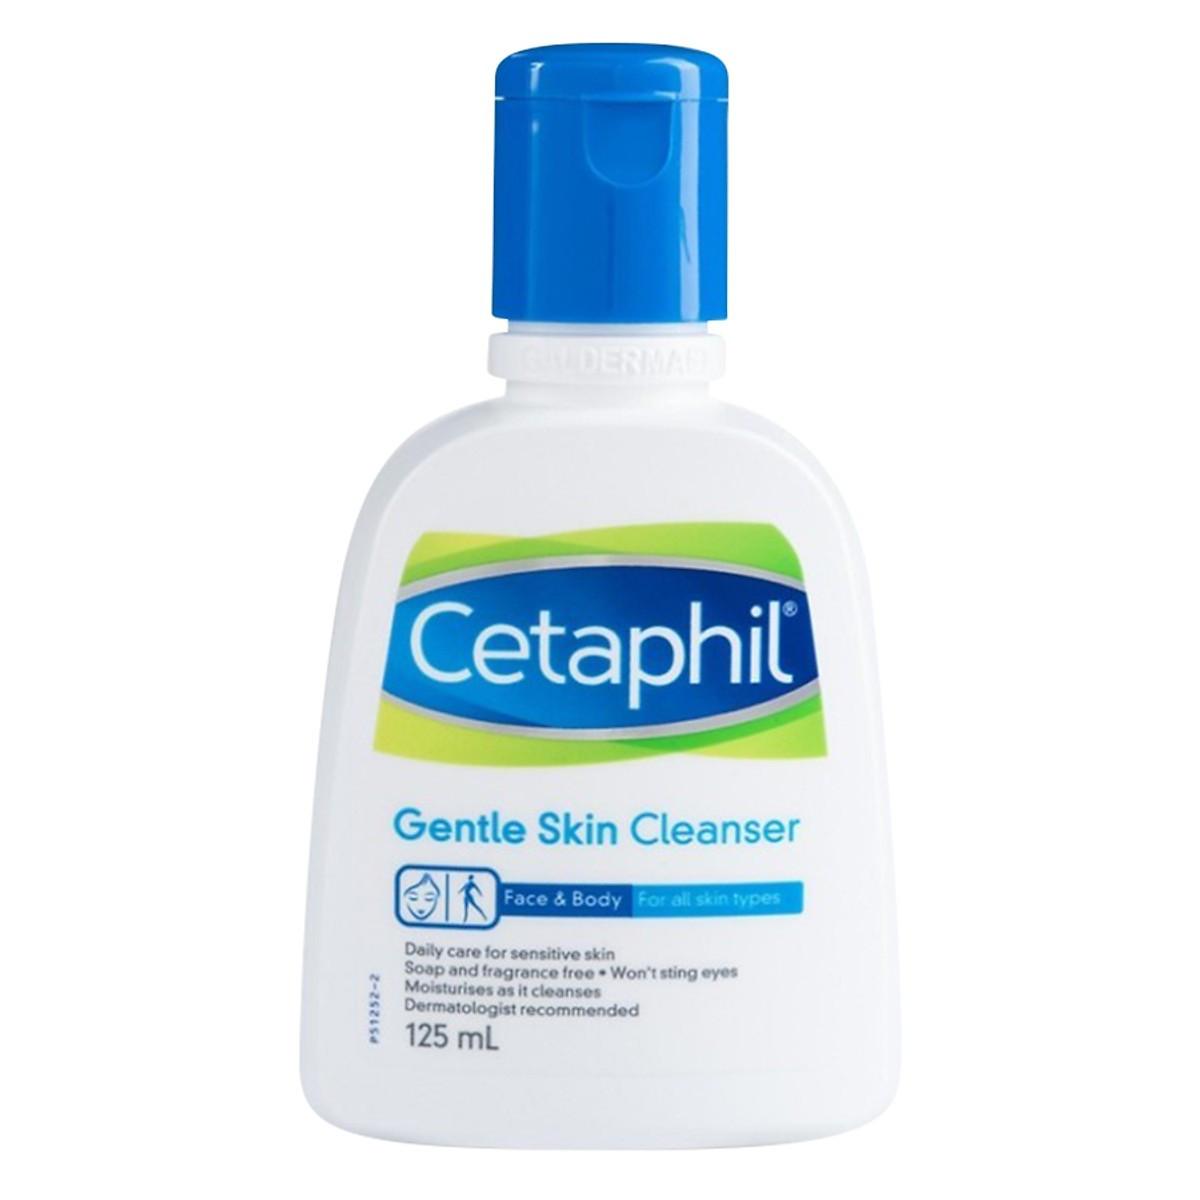 Review Sữa Rửa Mặt Cetaphil Gentle Skin Cleanser (125ml)